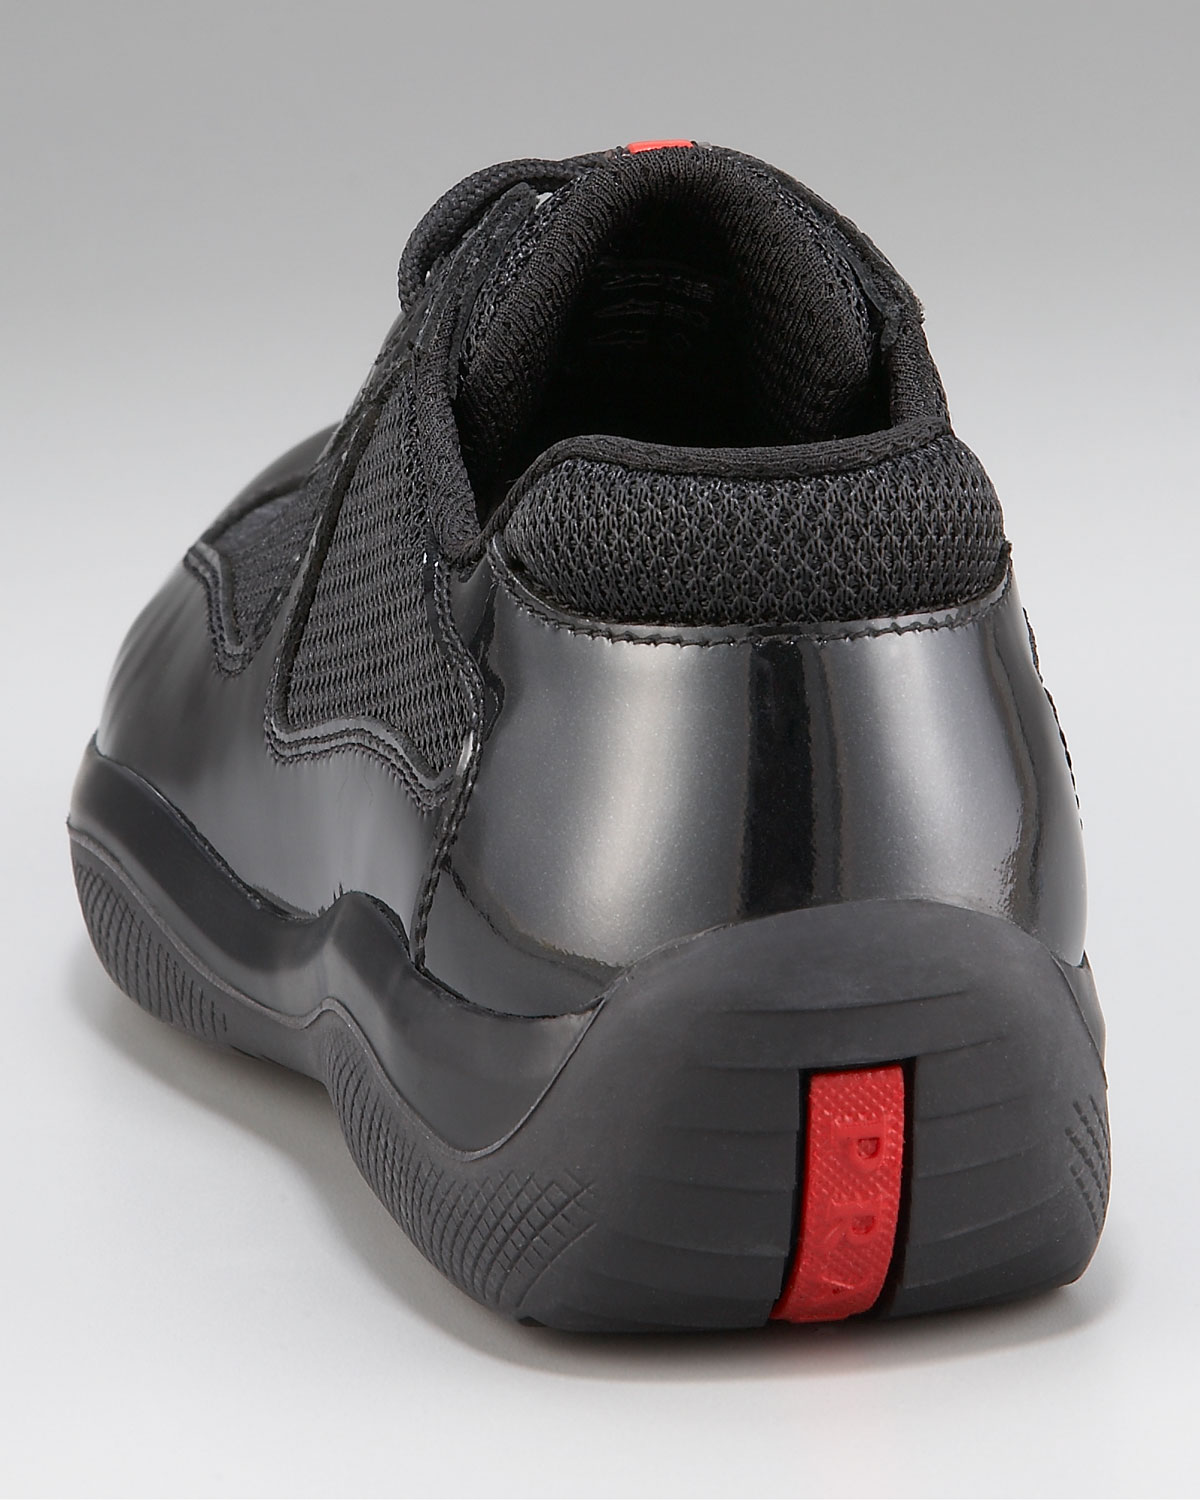 Lyst - Prada Patent Leather Sneaker in Black